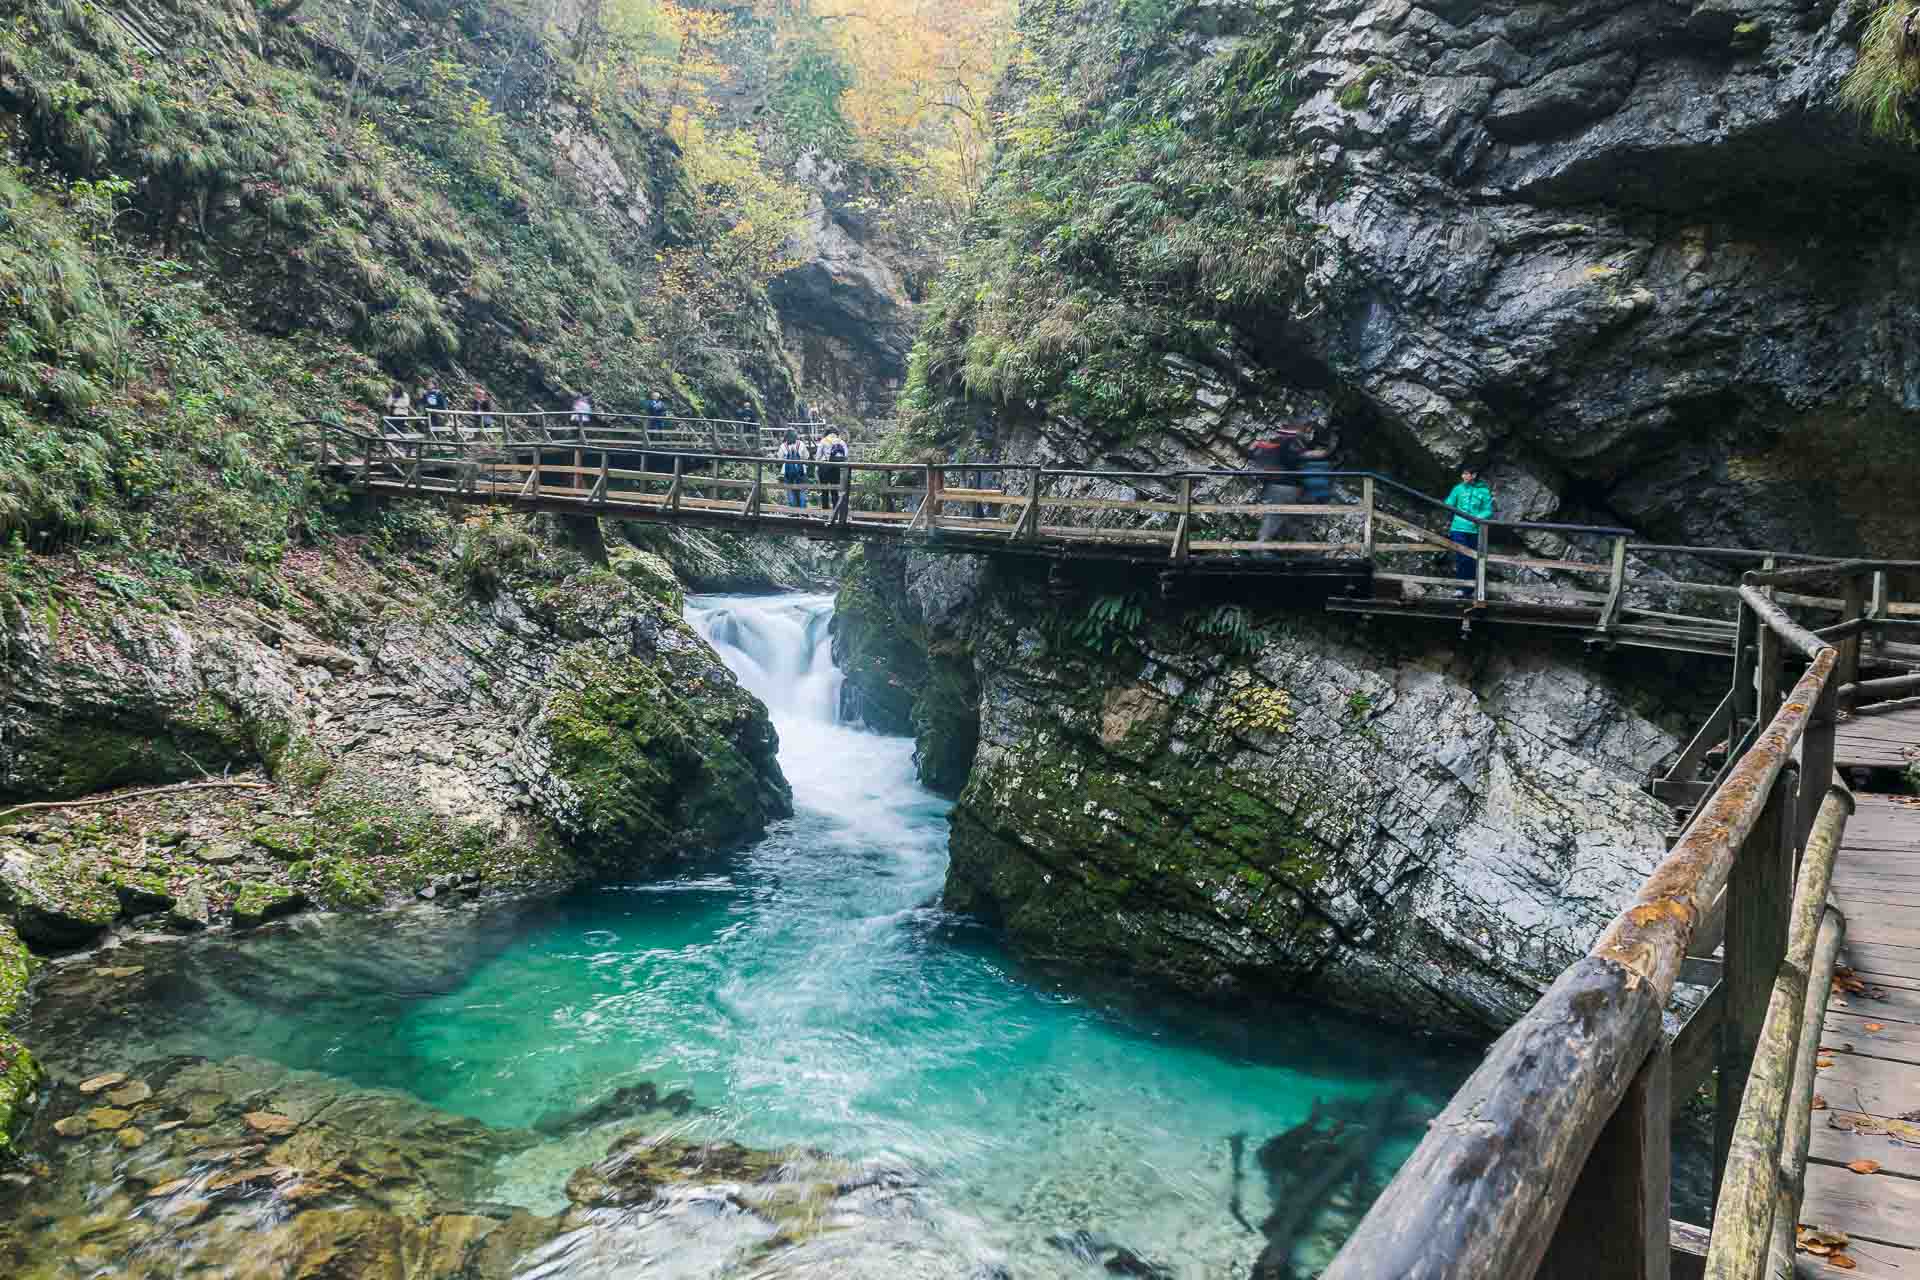 A pedestrian passage through the gorge of Soteska Vintgar in Slovenia